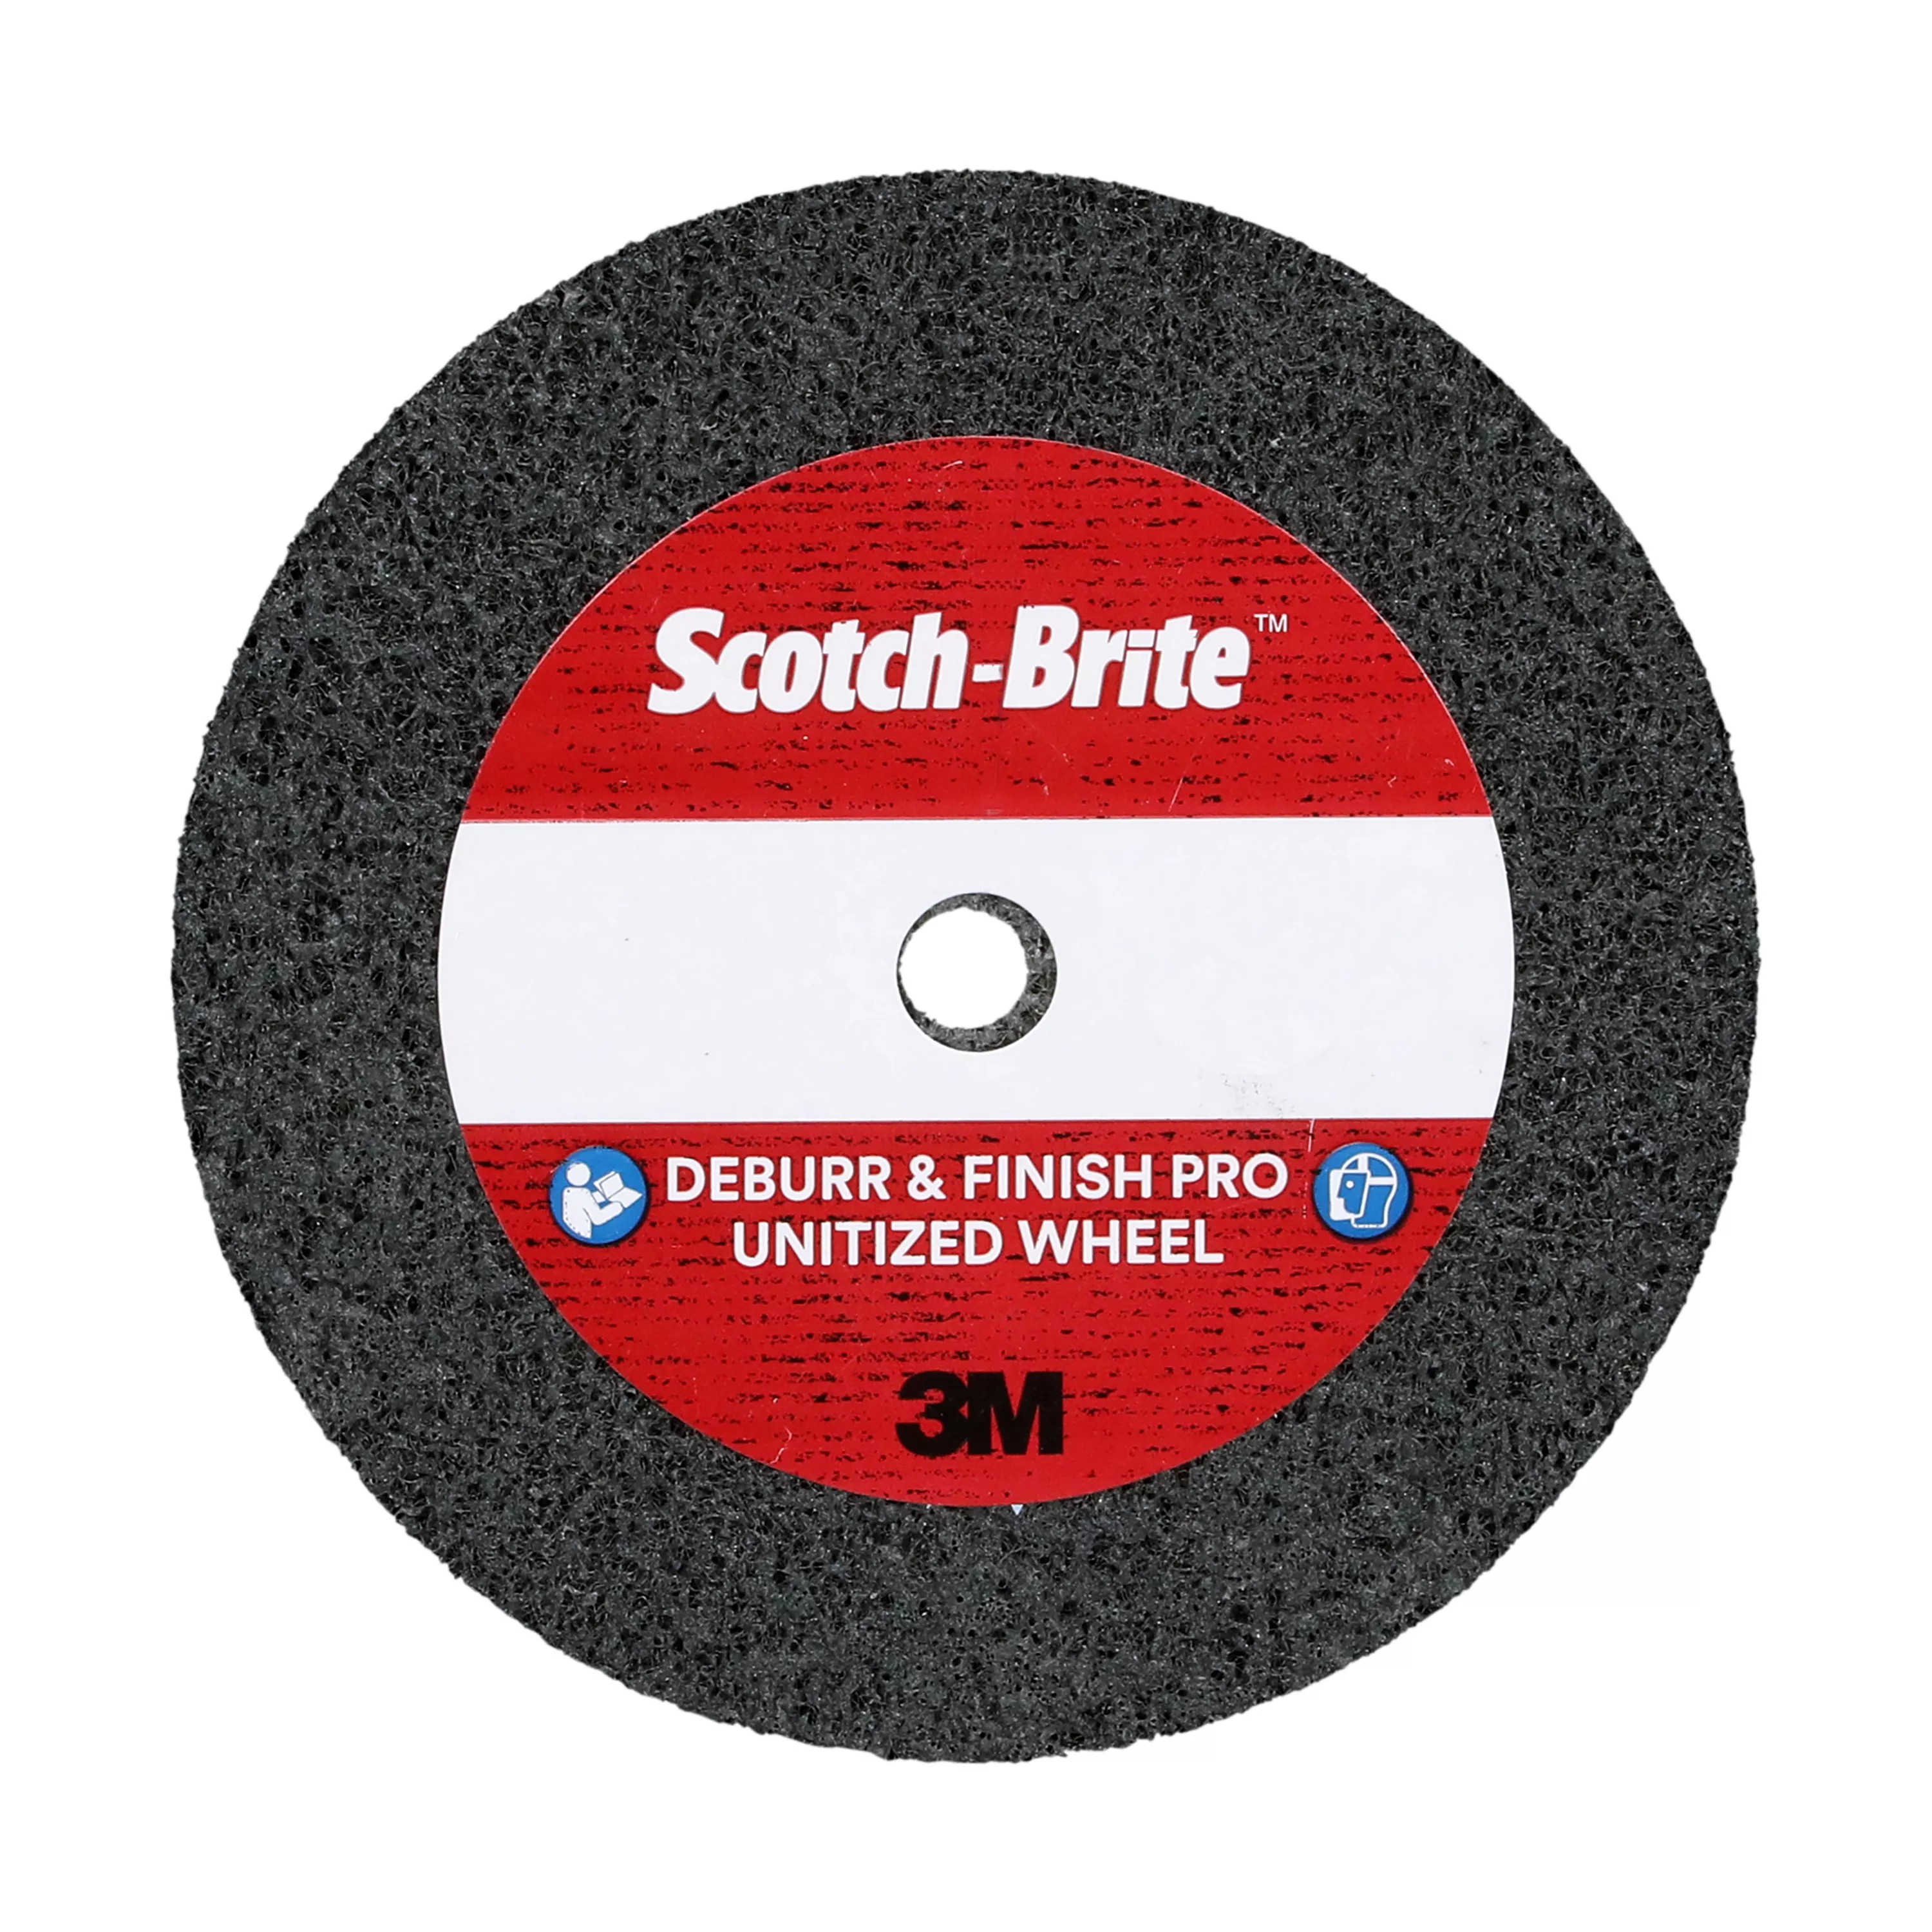 SKU 7100143462 | Scotch-Brite™ Deburr & Finish Pro Unitized Wheel